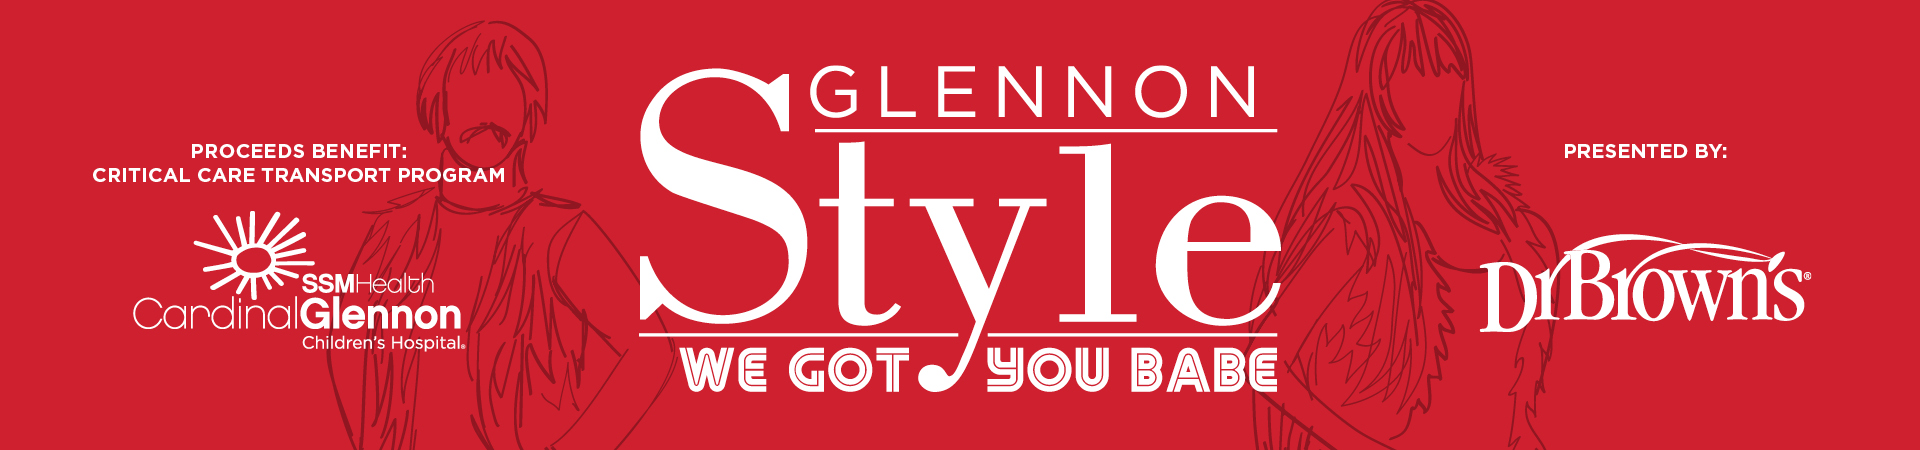 Glennon Style Fashion Show - Friday, April 24 at the Ritz Carlton